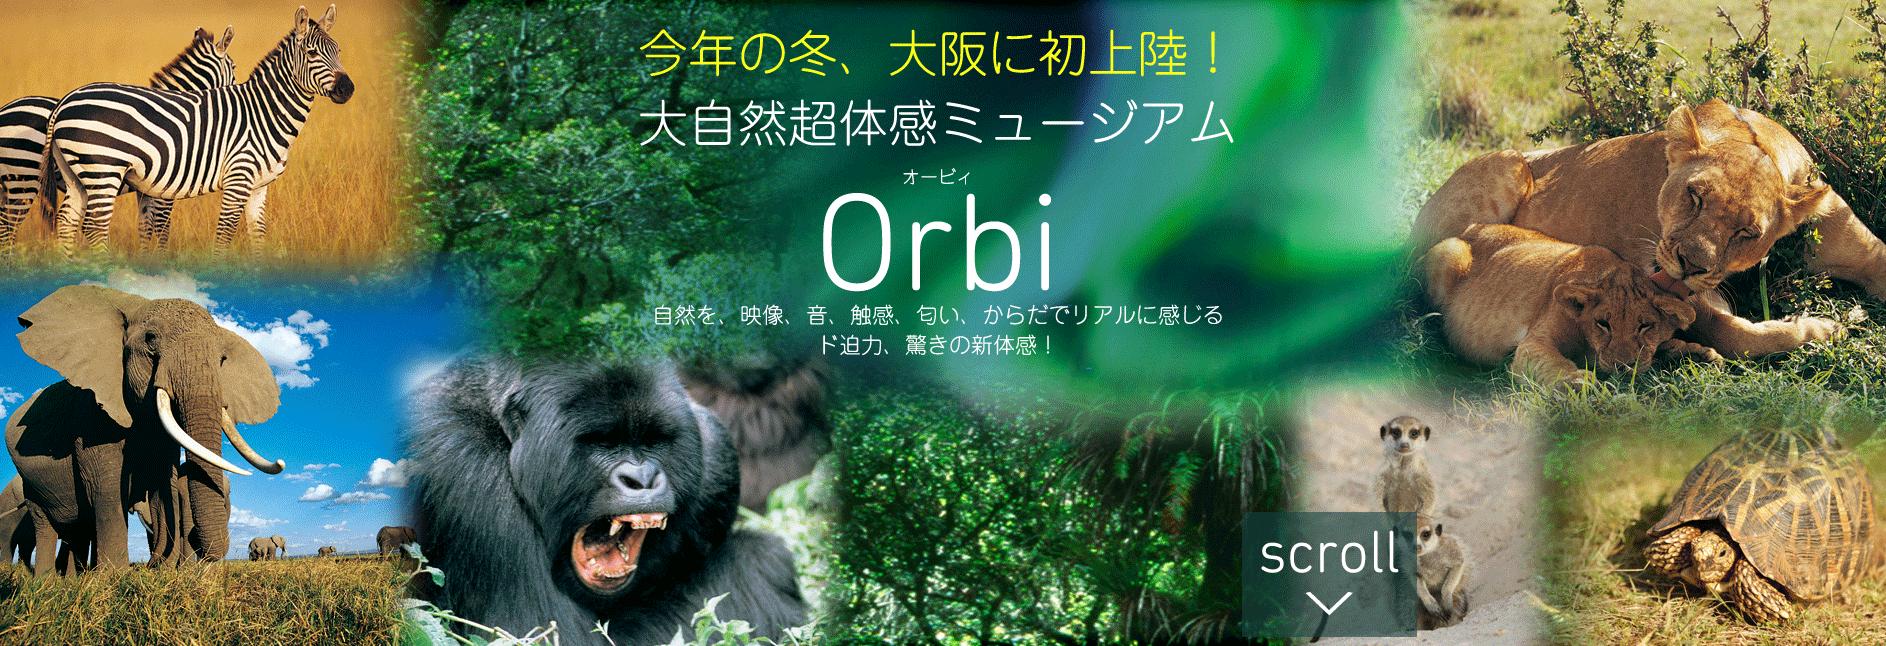 orbi04